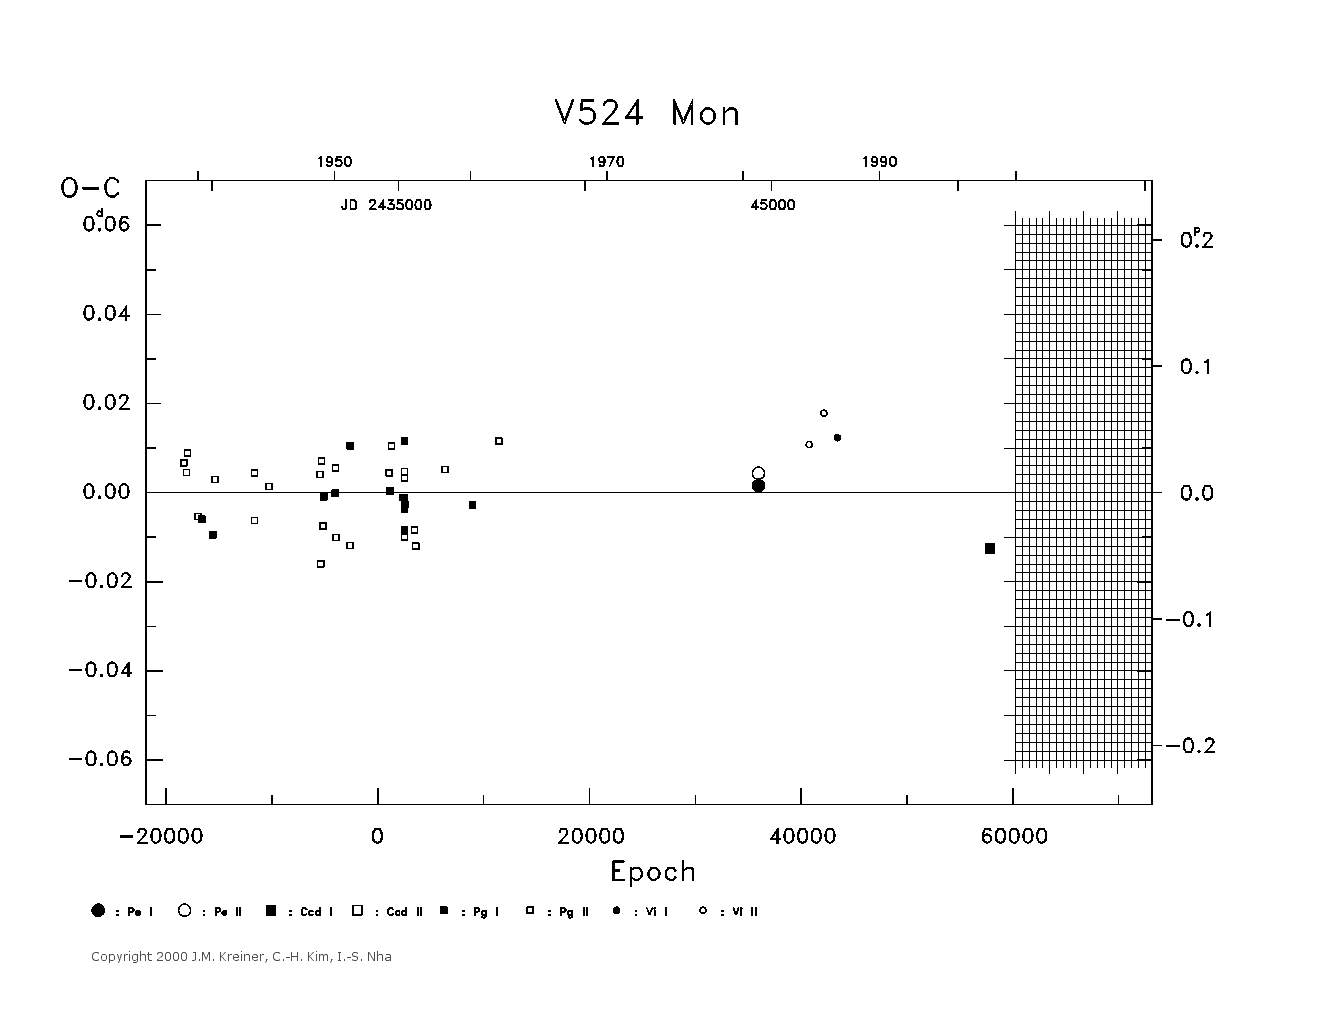 [IMAGE: large V524 MON O-C diagram]